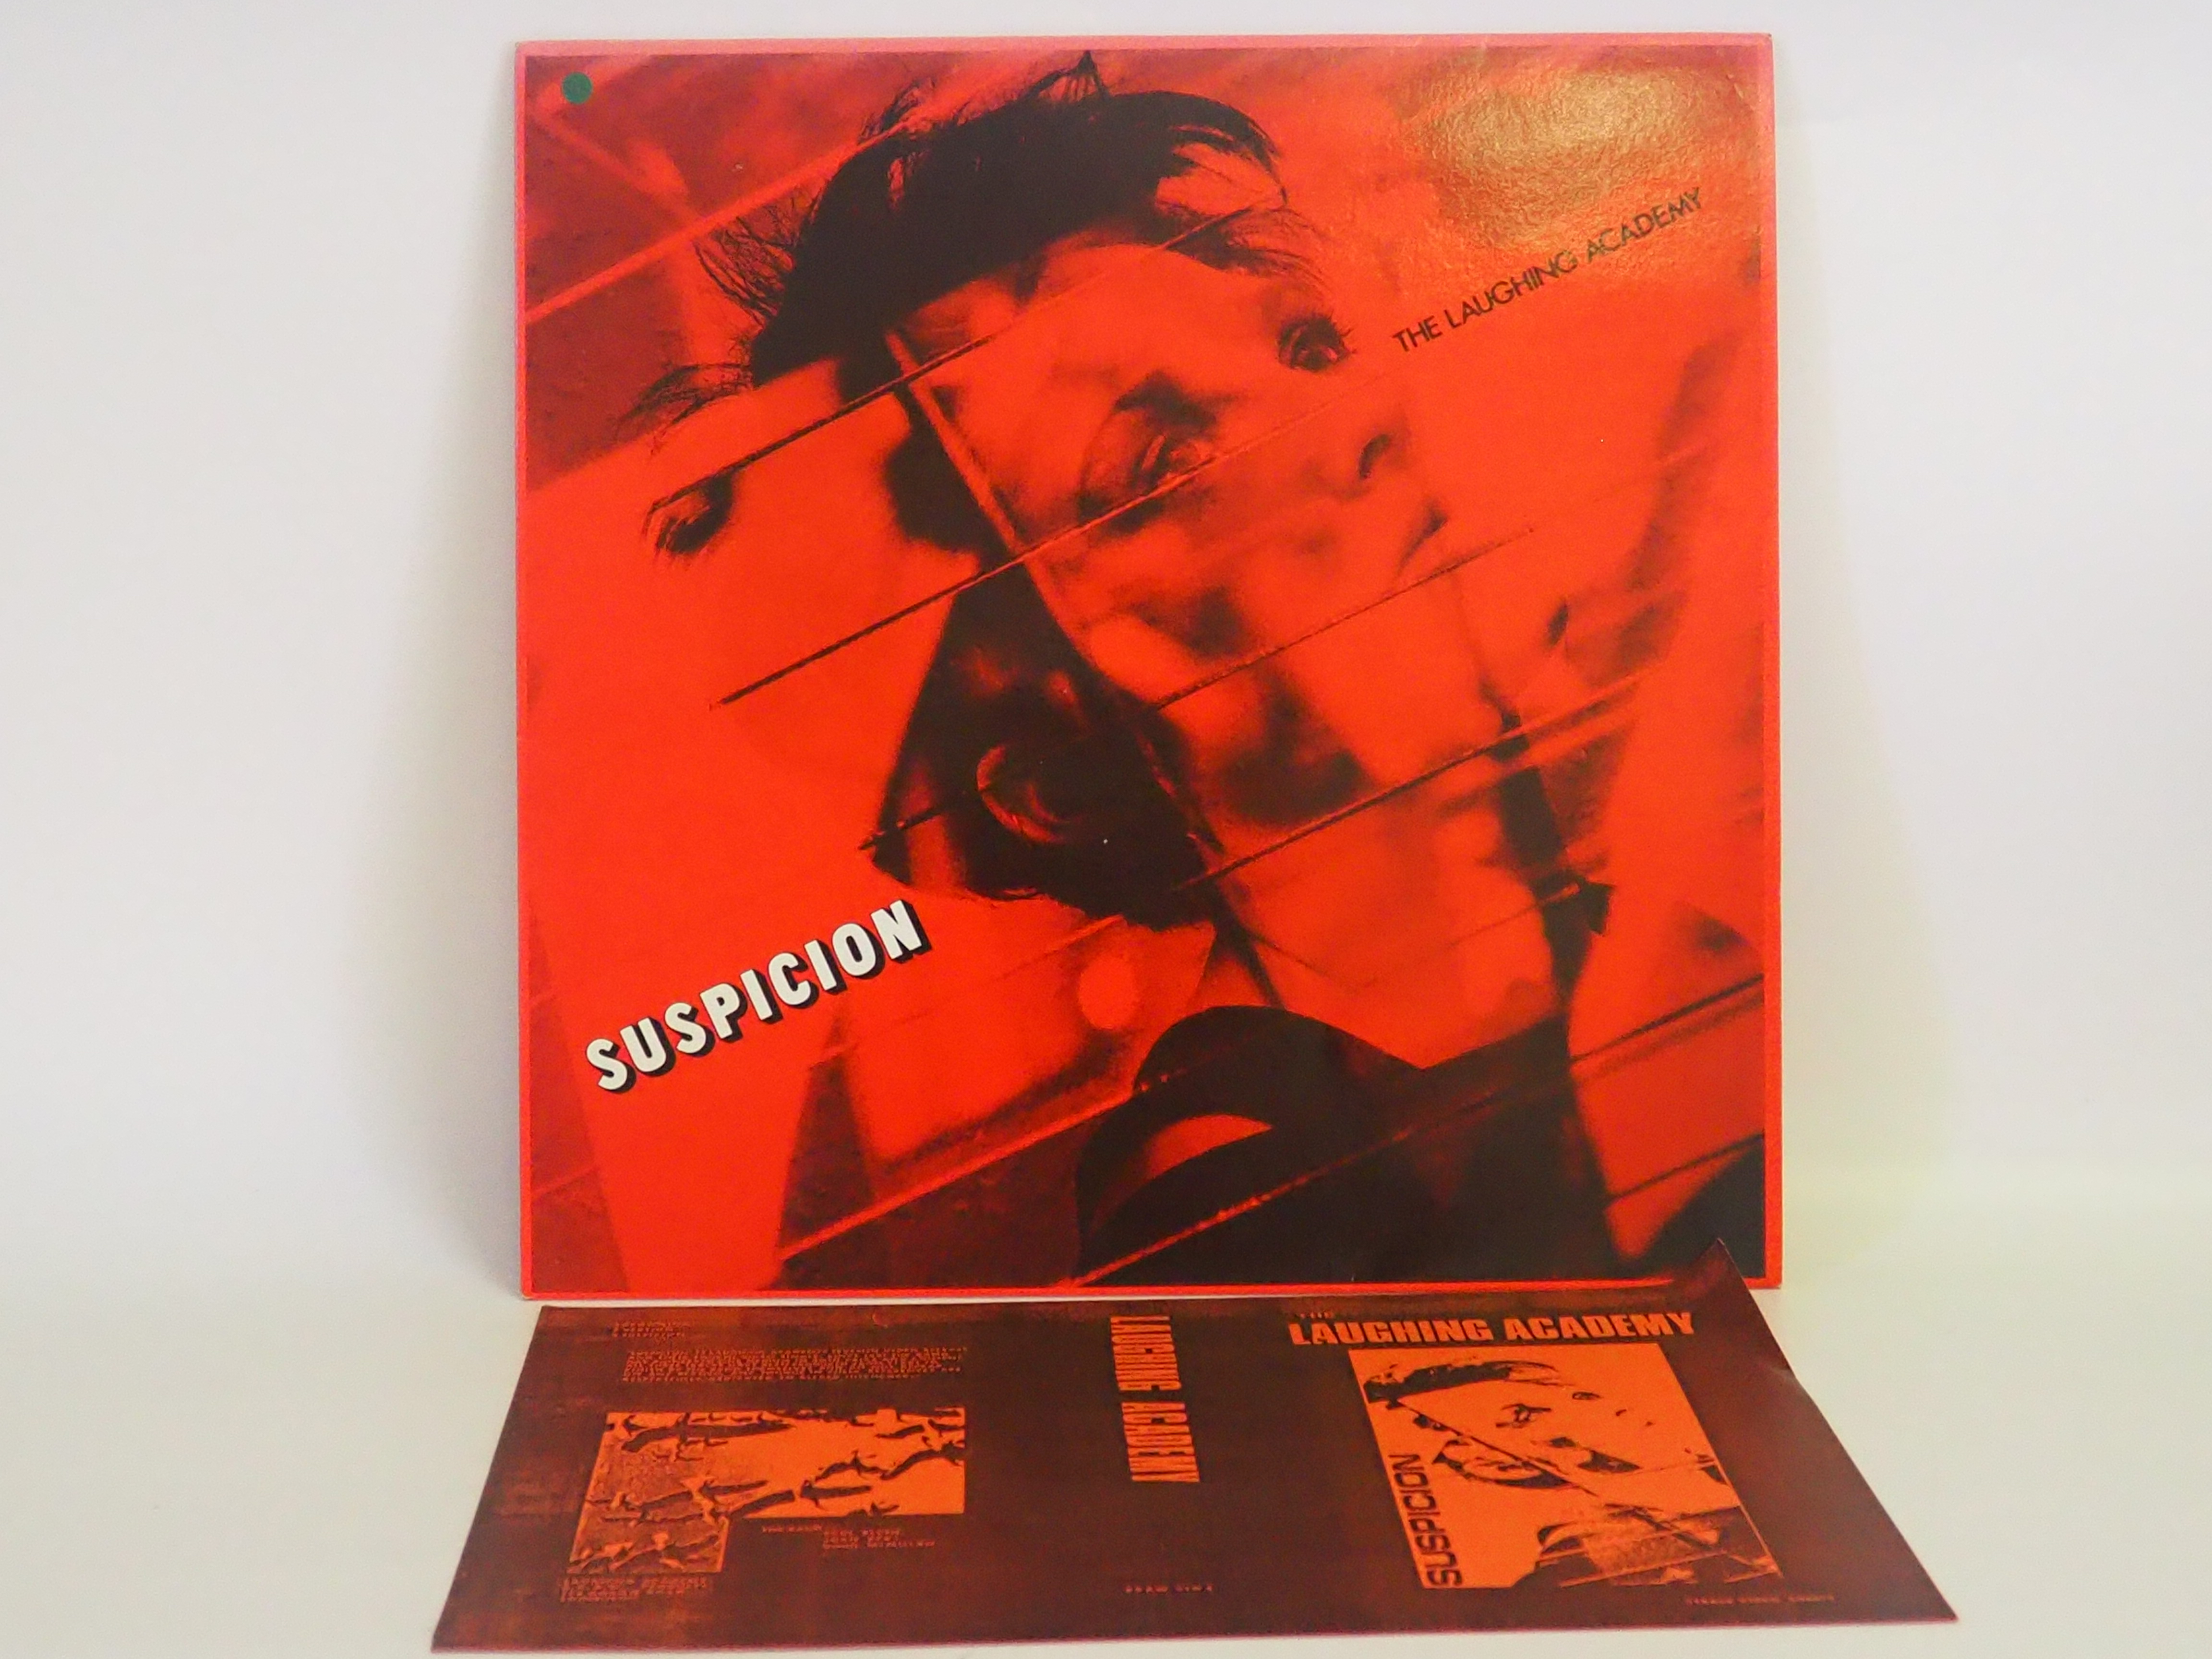 The Laughing Academy - Suspicion - 12" Vinyl Album